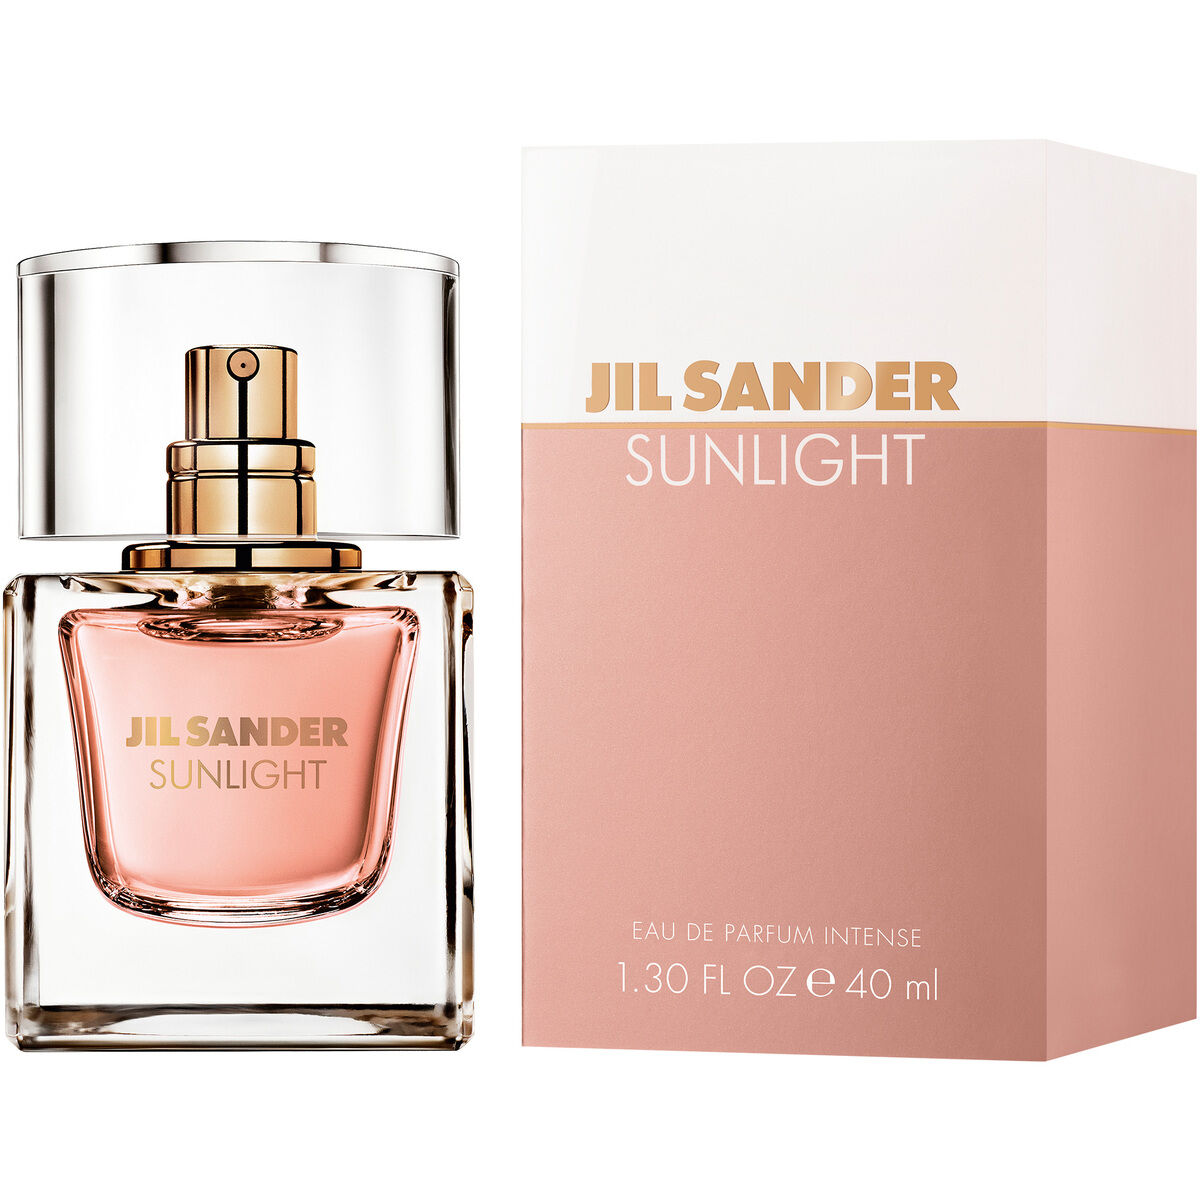 Sunlight Intense Jil Sander perfume - a fragrance for women 2020